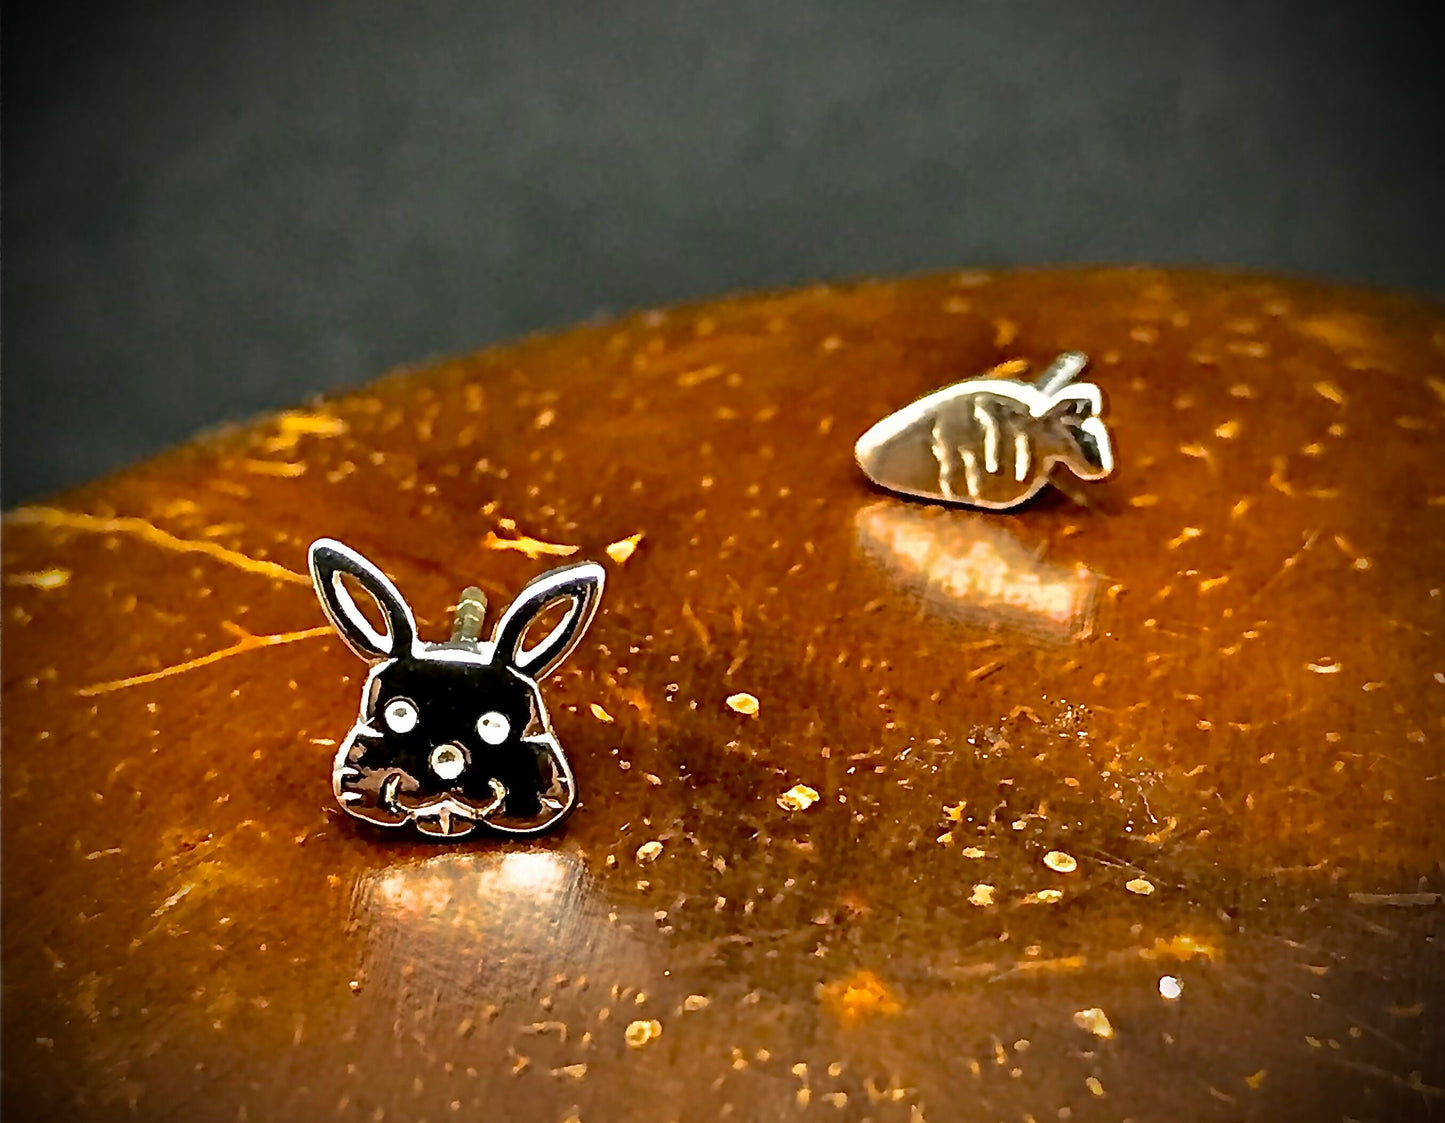 Rabbit and Carrot earrings Sterling Silver 925 - TSE001